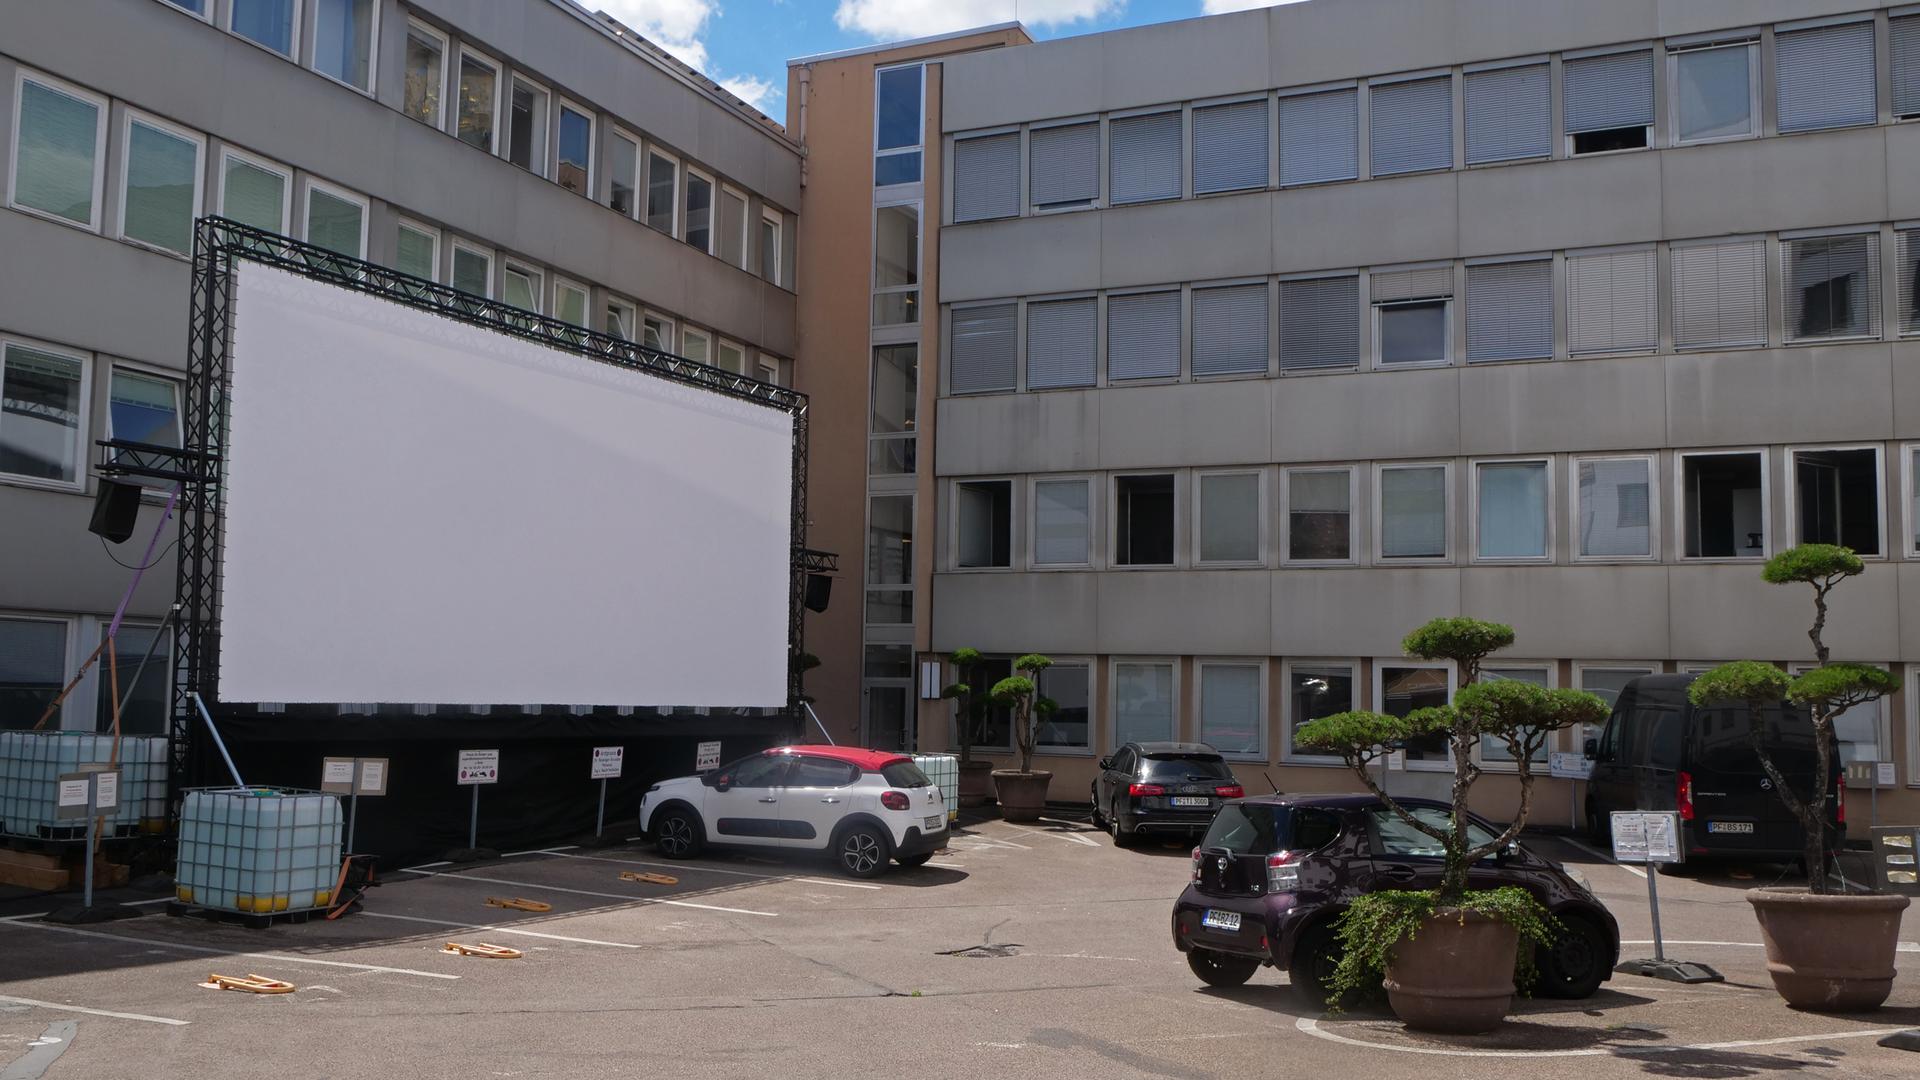 Kinoleinwand in Hof an Gebäudefront